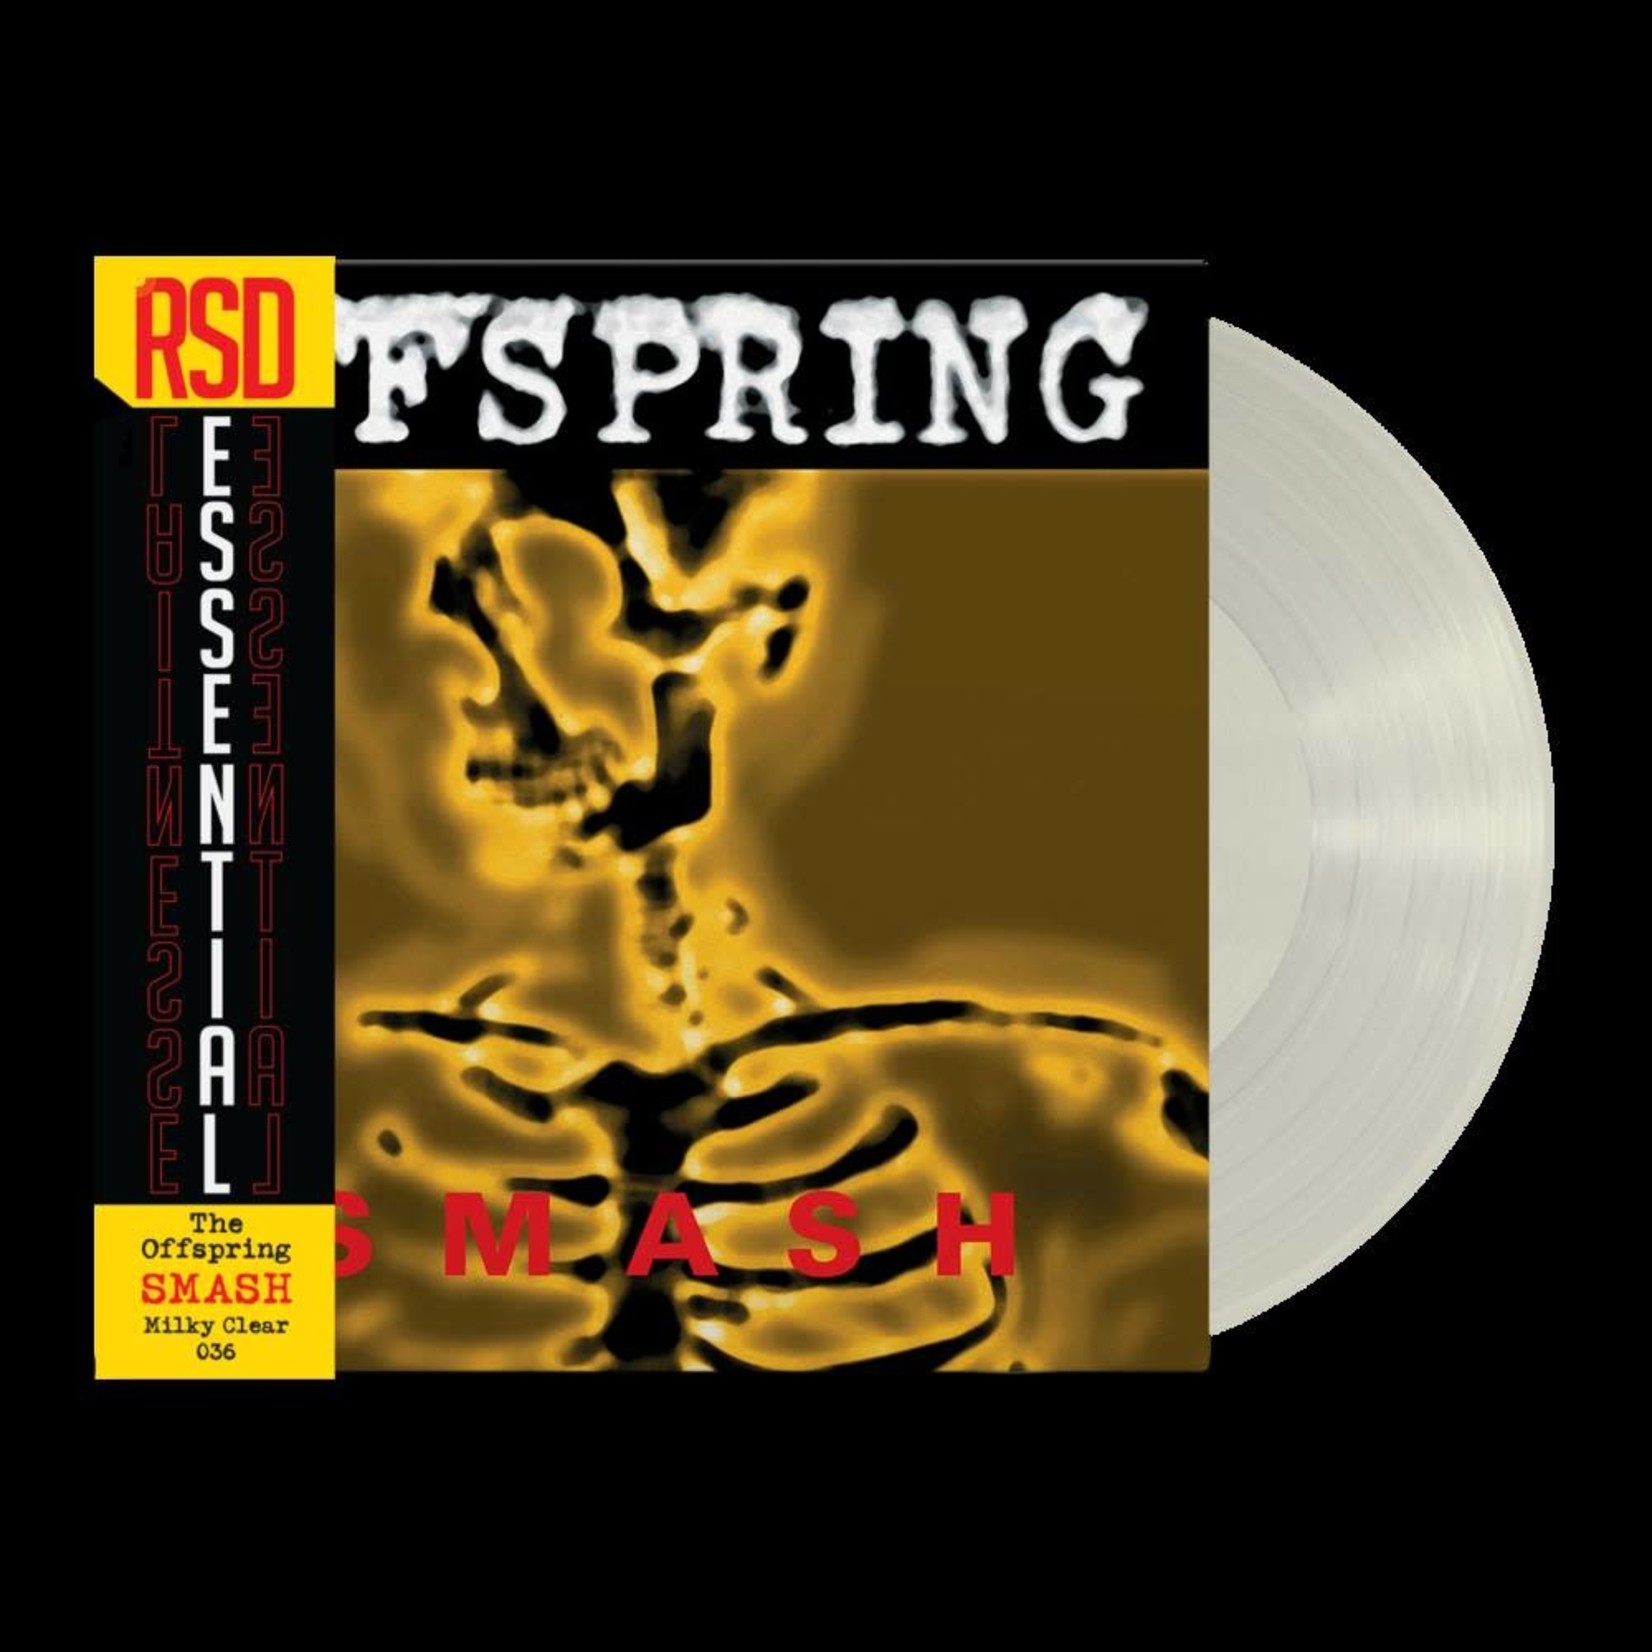 [New] Offspring - Smash (RSD Essentials, milky clear vinyl)